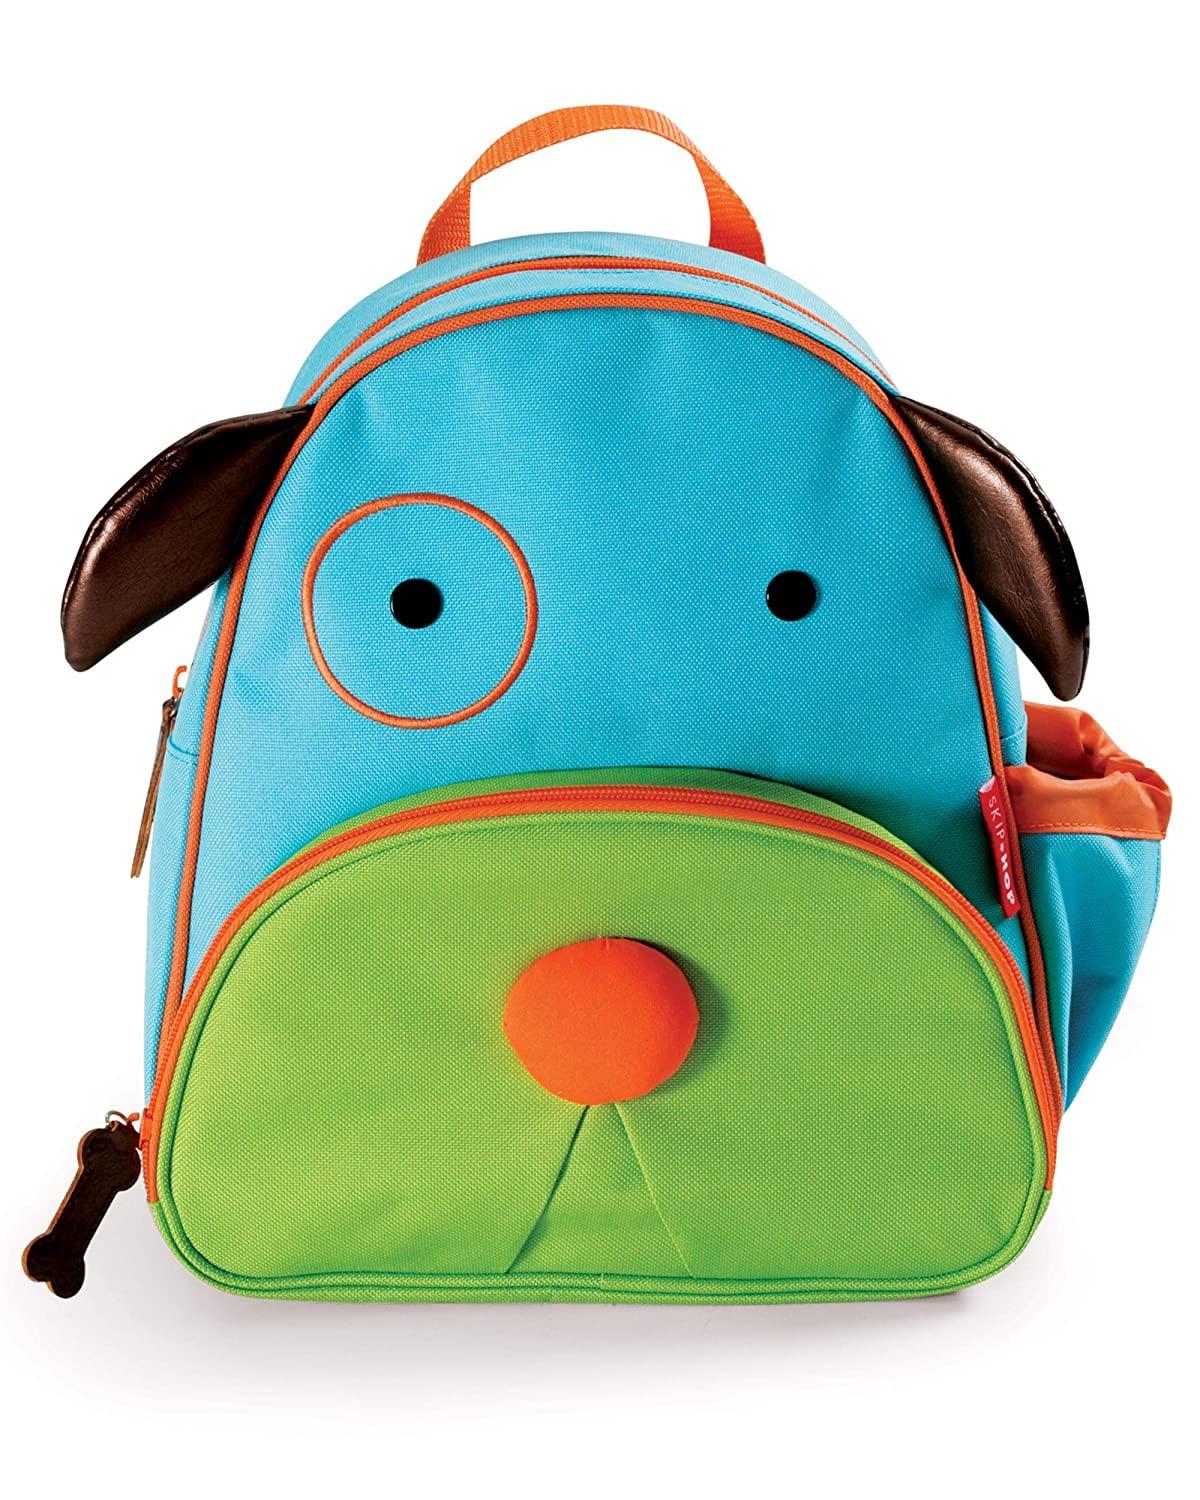  Skip Hop Toddler Backpack, Zoo Preschool Ages 3-4